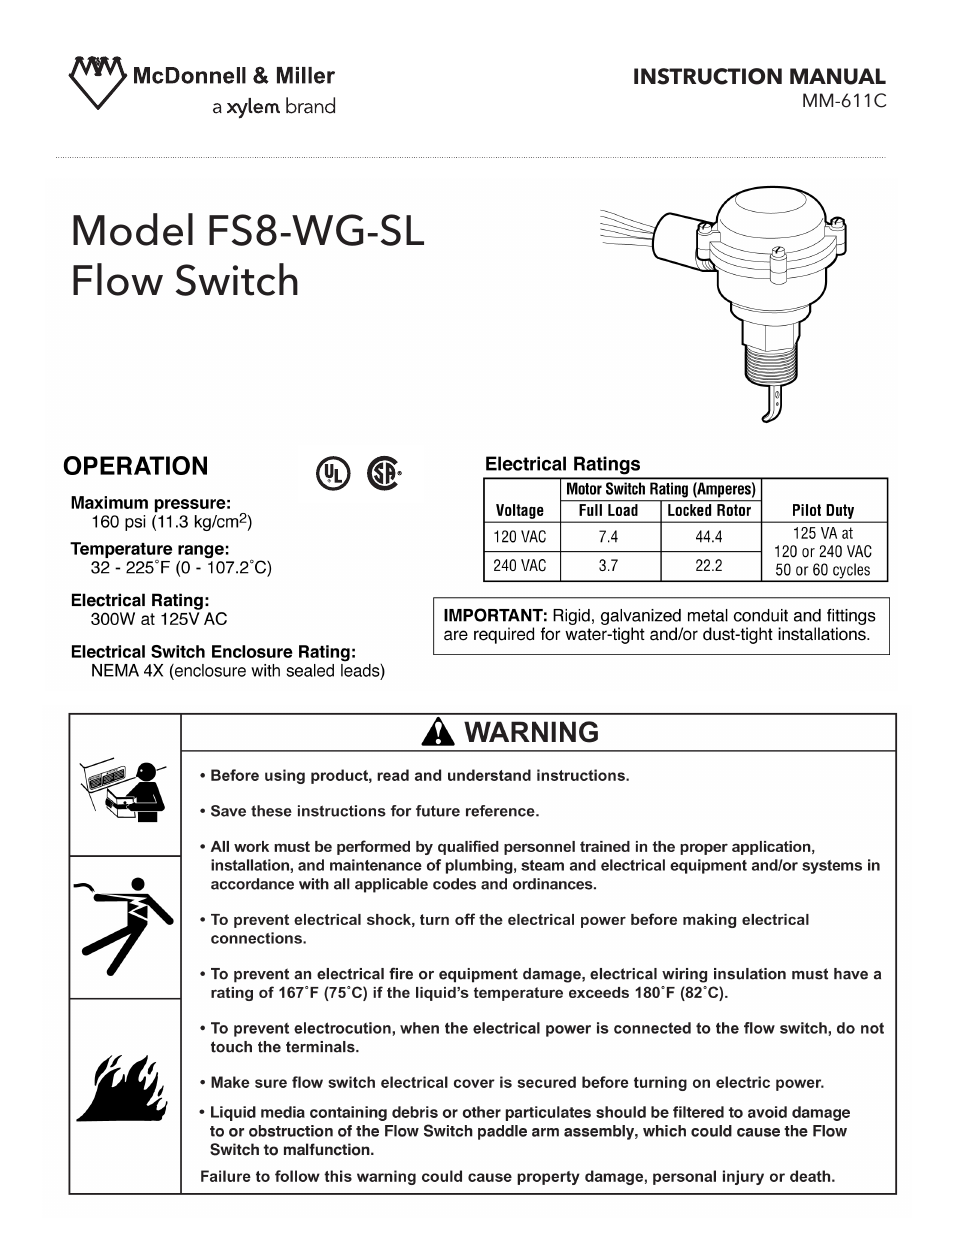 MM 611C Model FS8-WG-SL Flow Switch